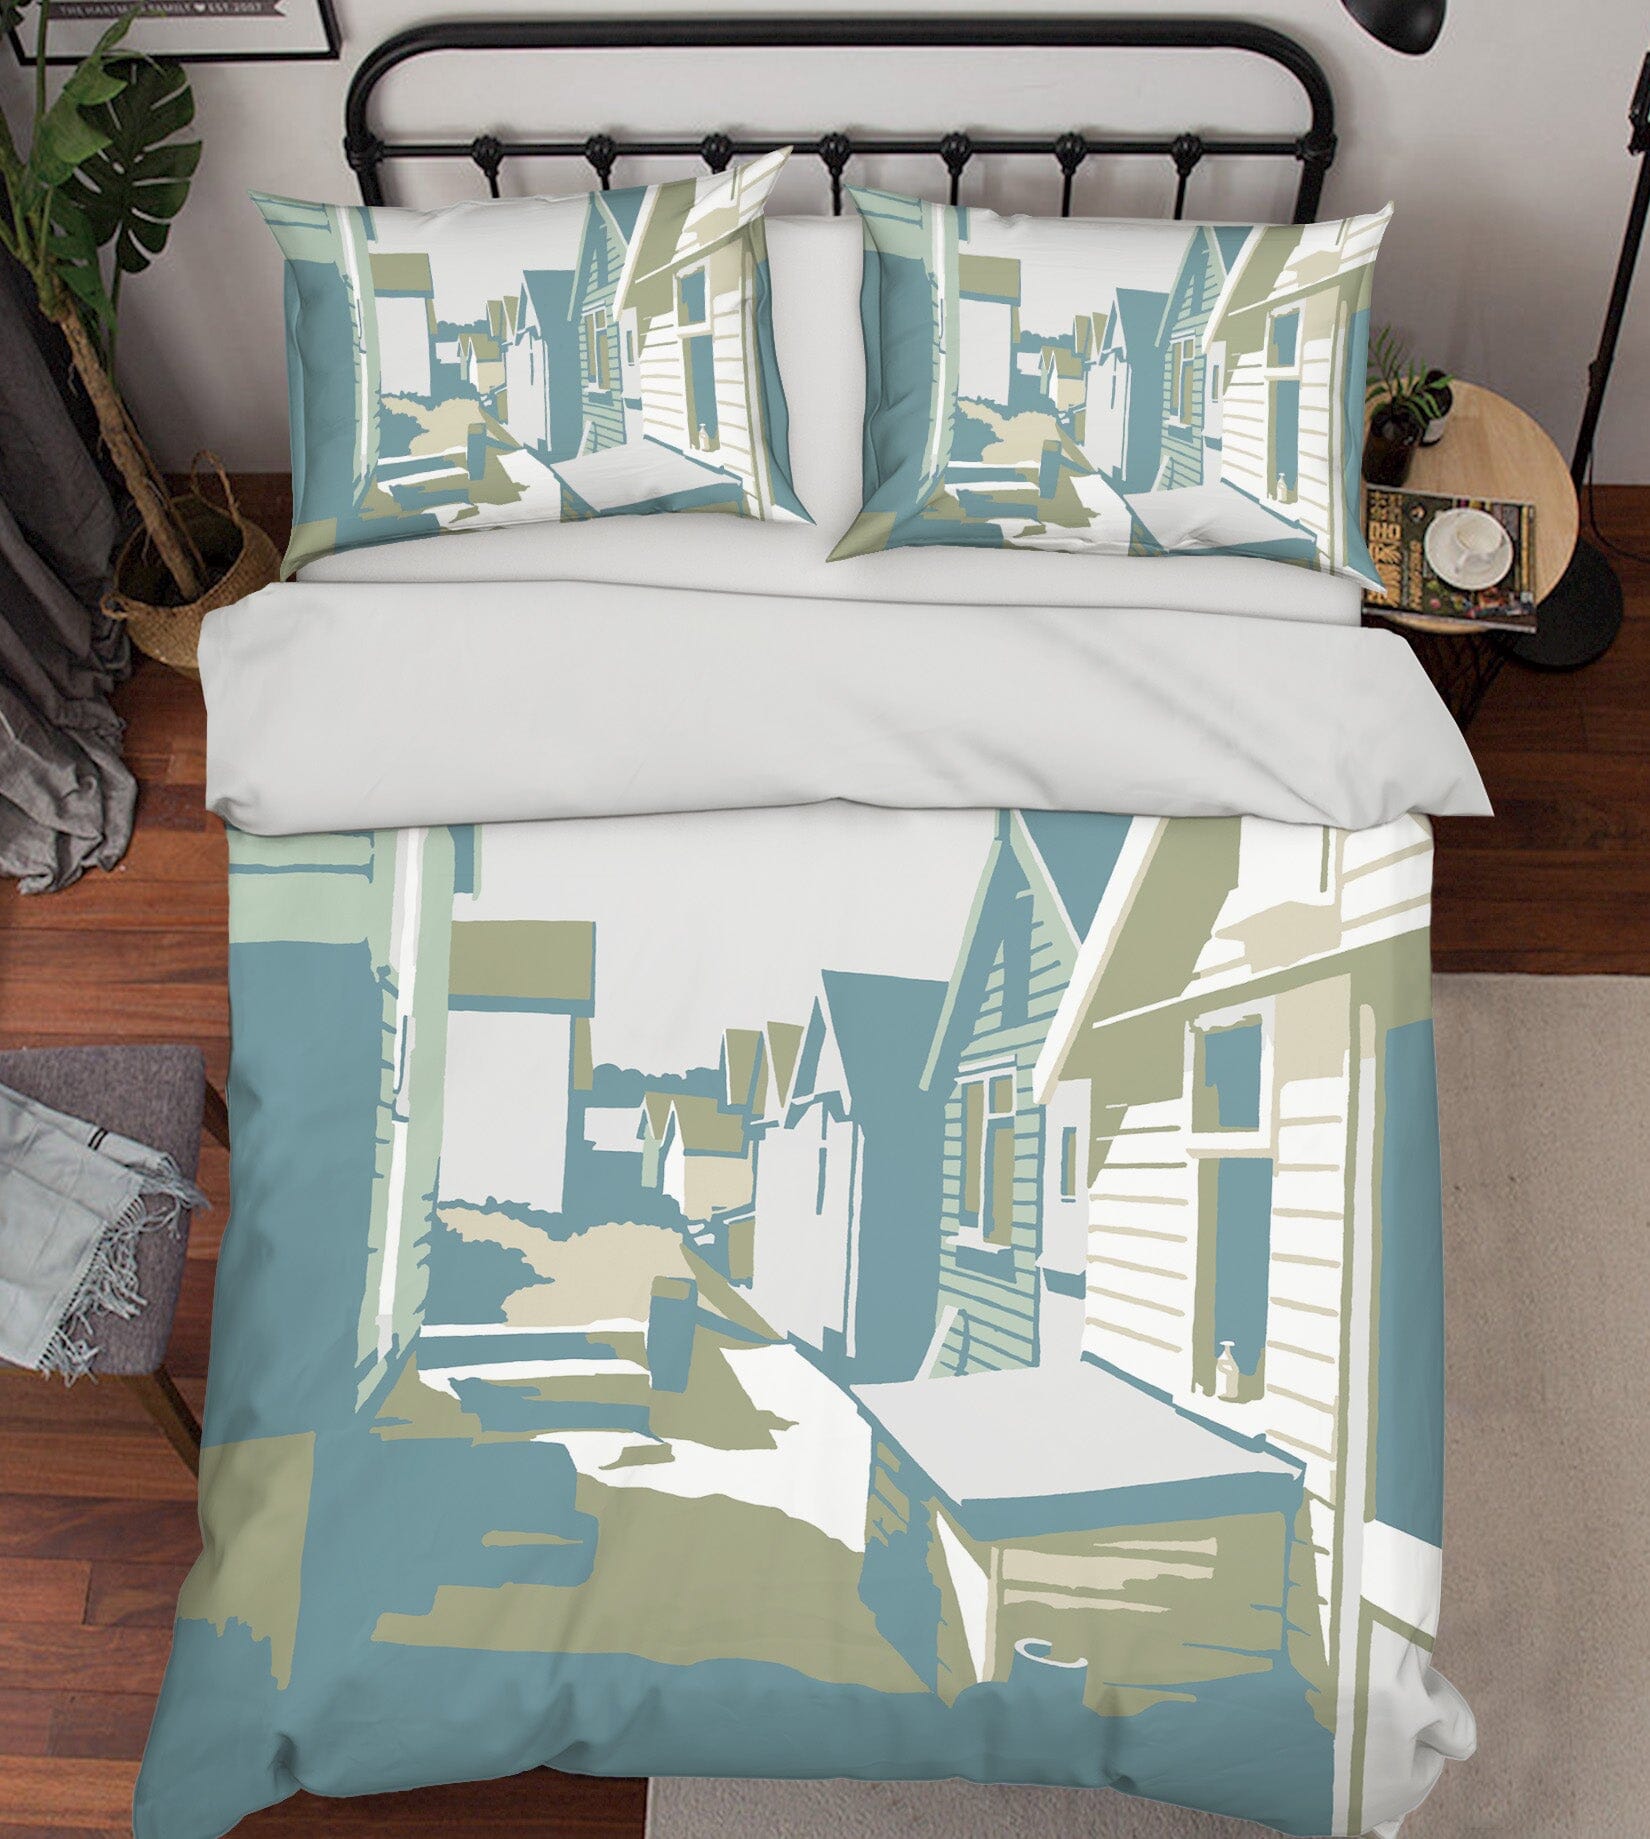 3D Mudeford Beach Huts 2029 Steve Read Bedding Bed Pillowcases Quilt Quiet Covers AJ Creativity Home 